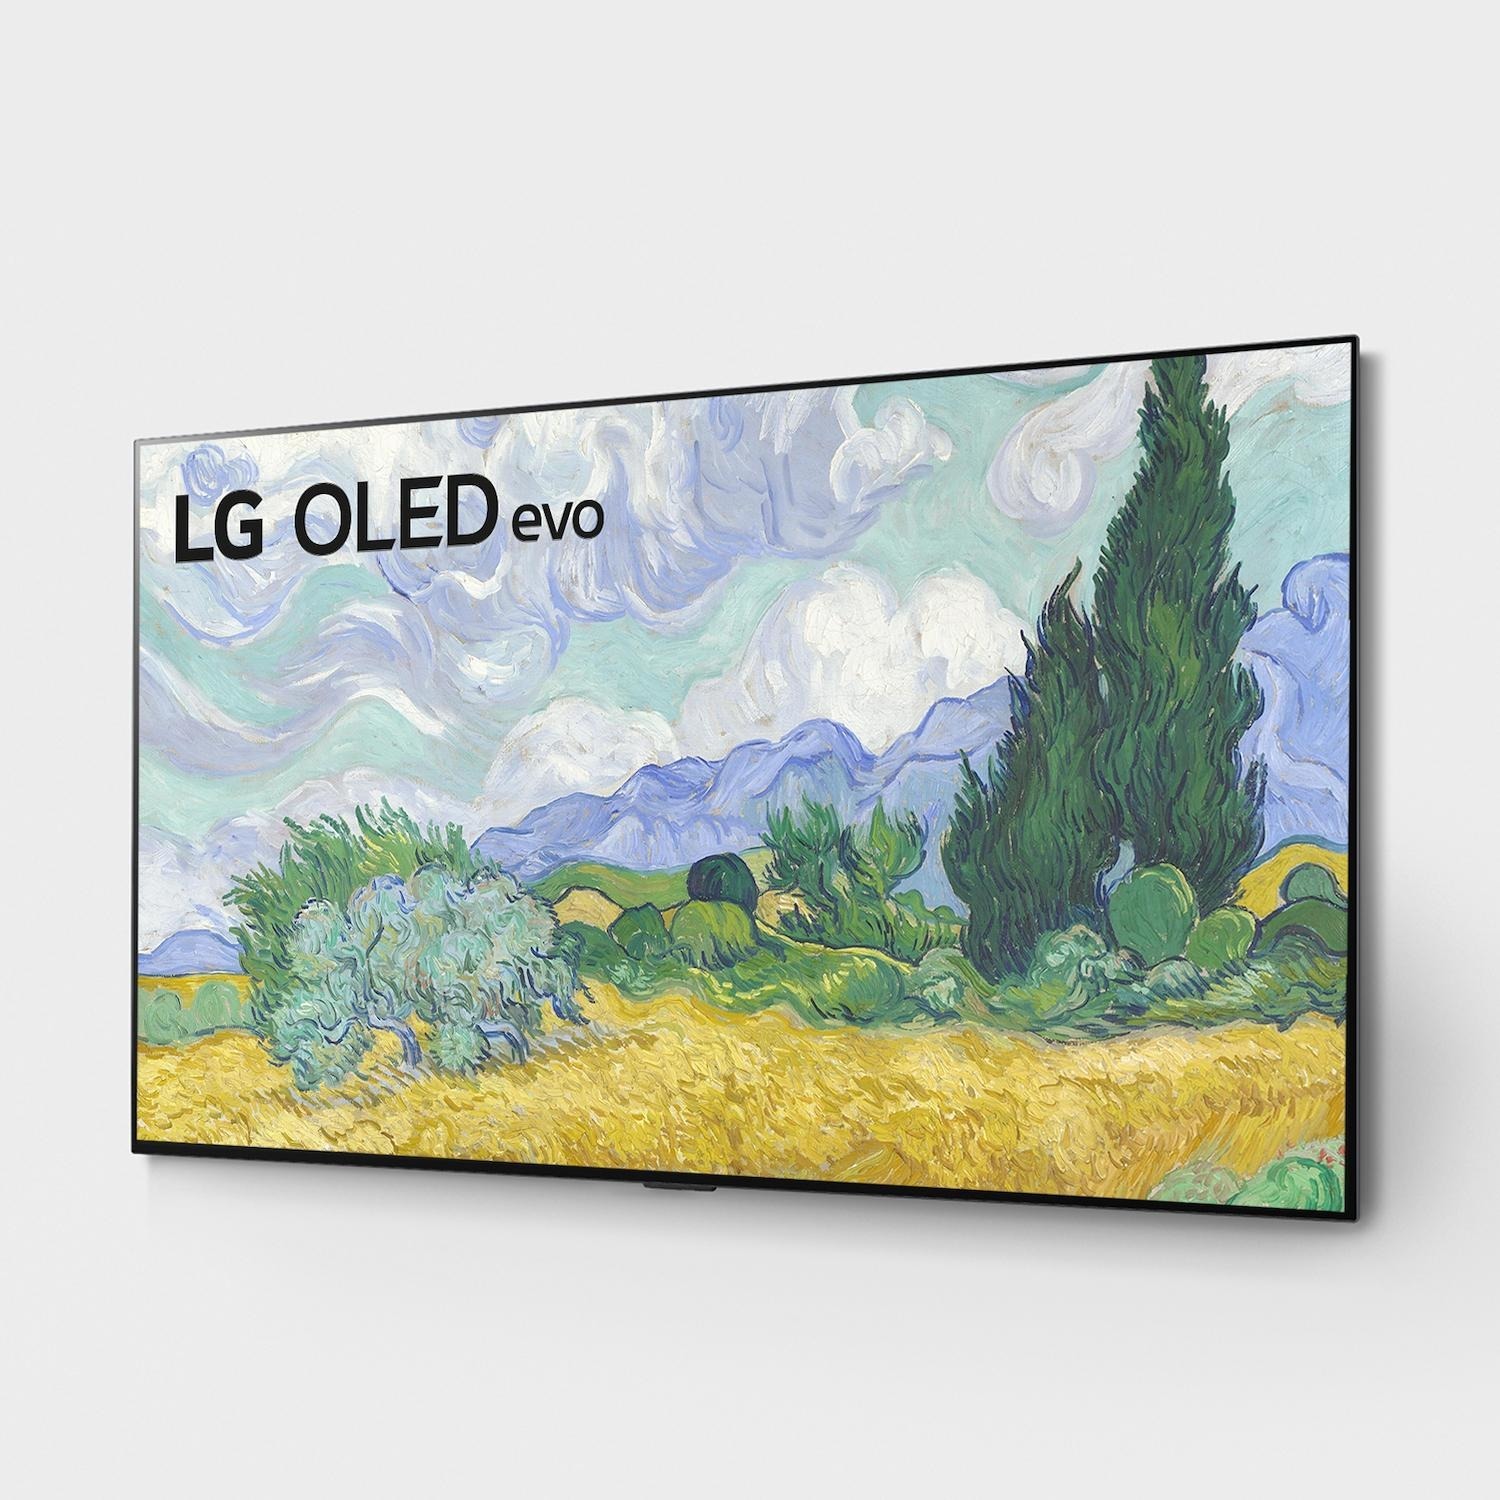 Immagine per TV OLED UHD 4K Smart LG OLED77G16 da DIMOStore